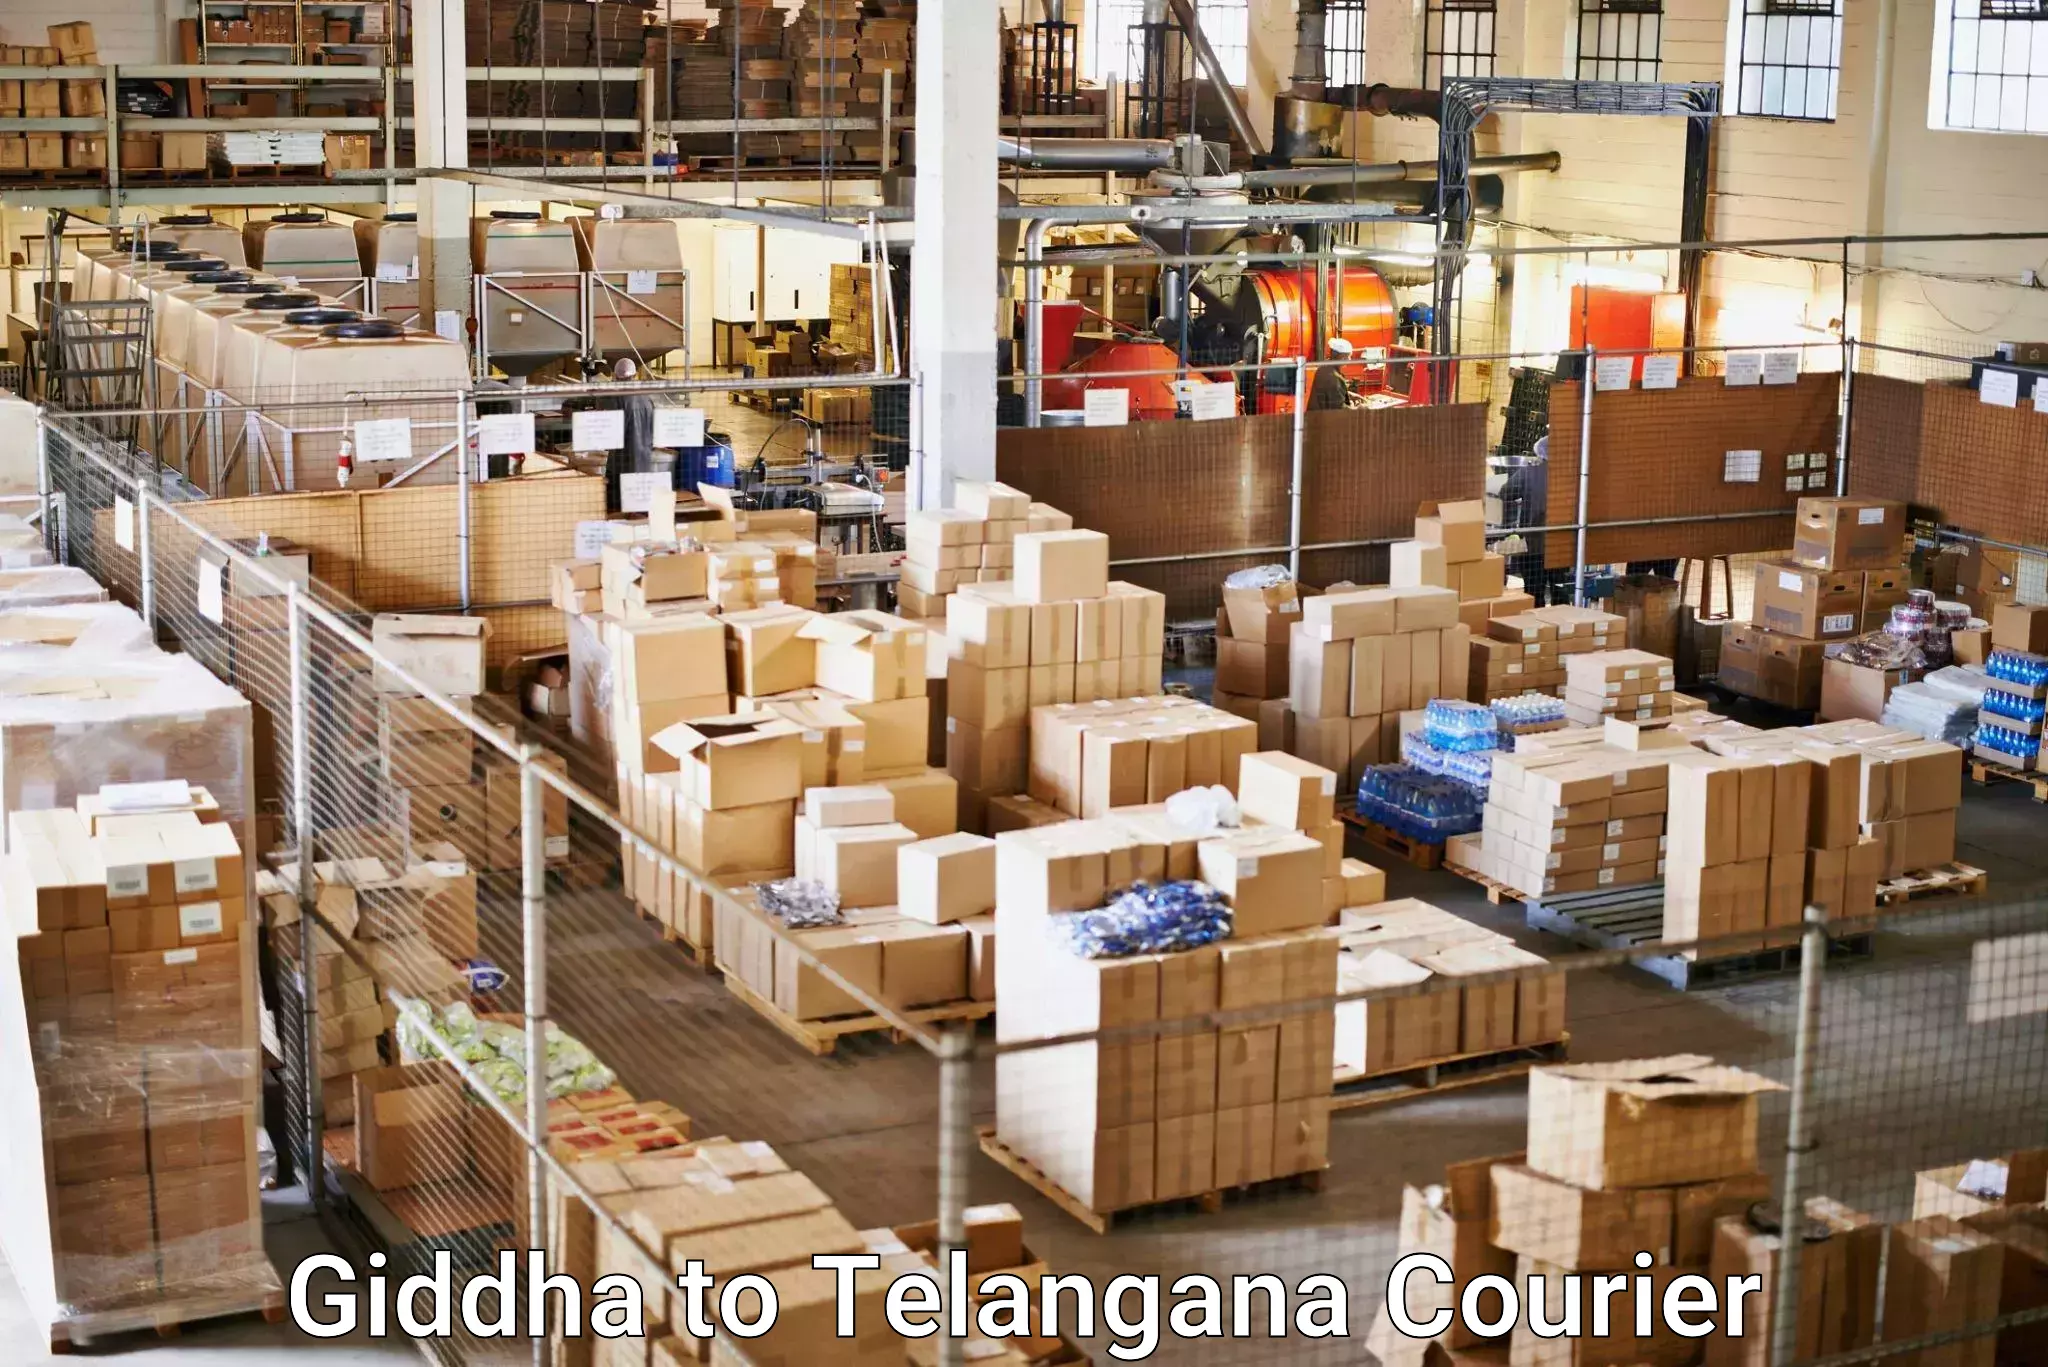 Expedited shipping methods Giddha to Khairatabad